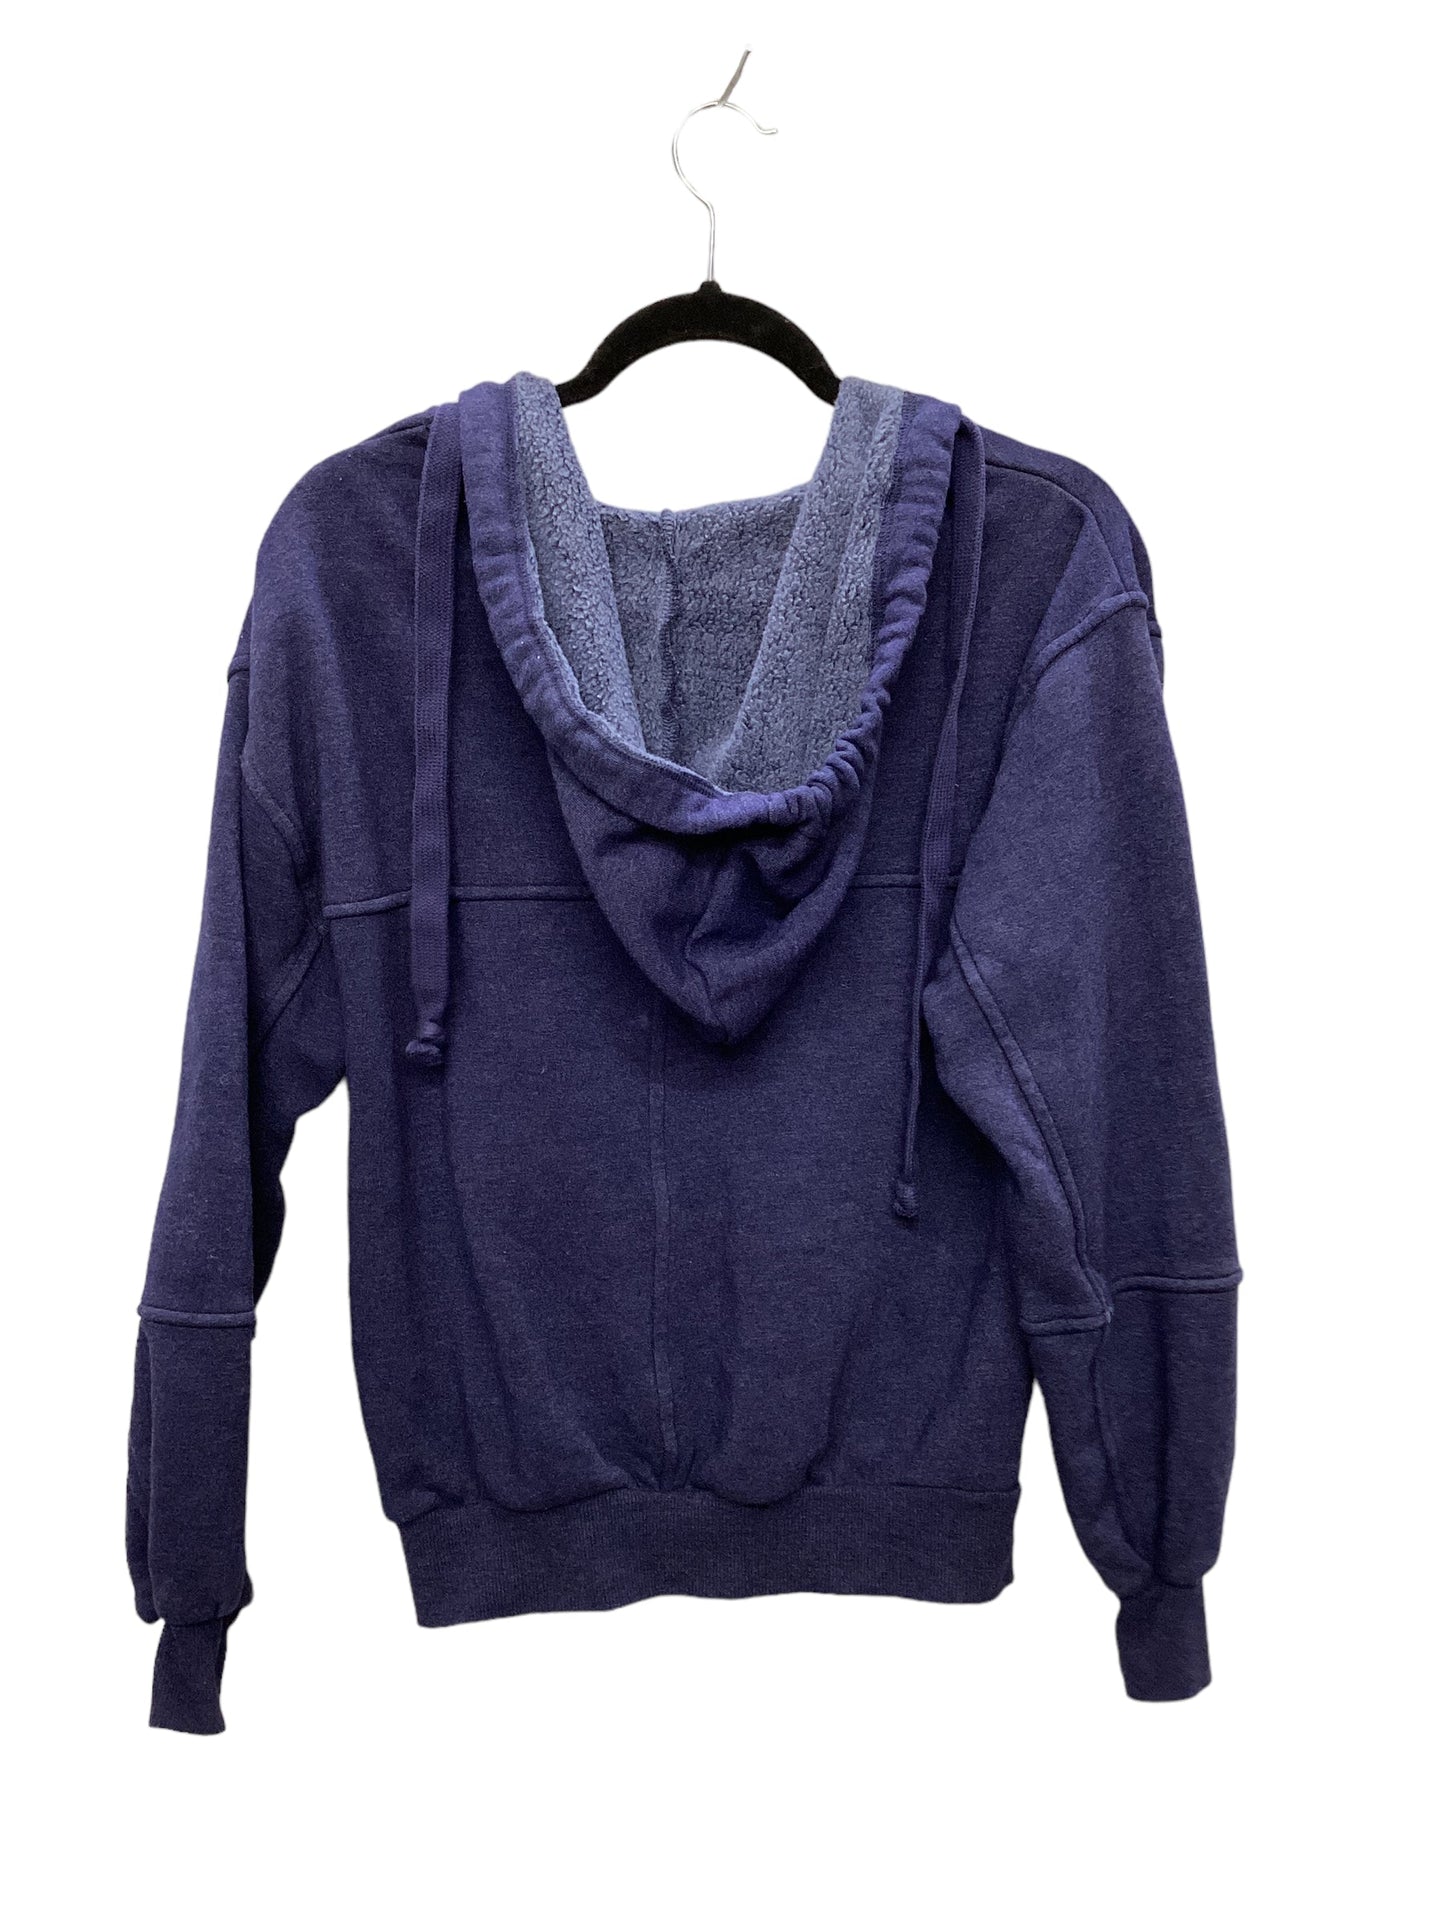 Sweatshirt Hoodie By Universal Thread  Size: M